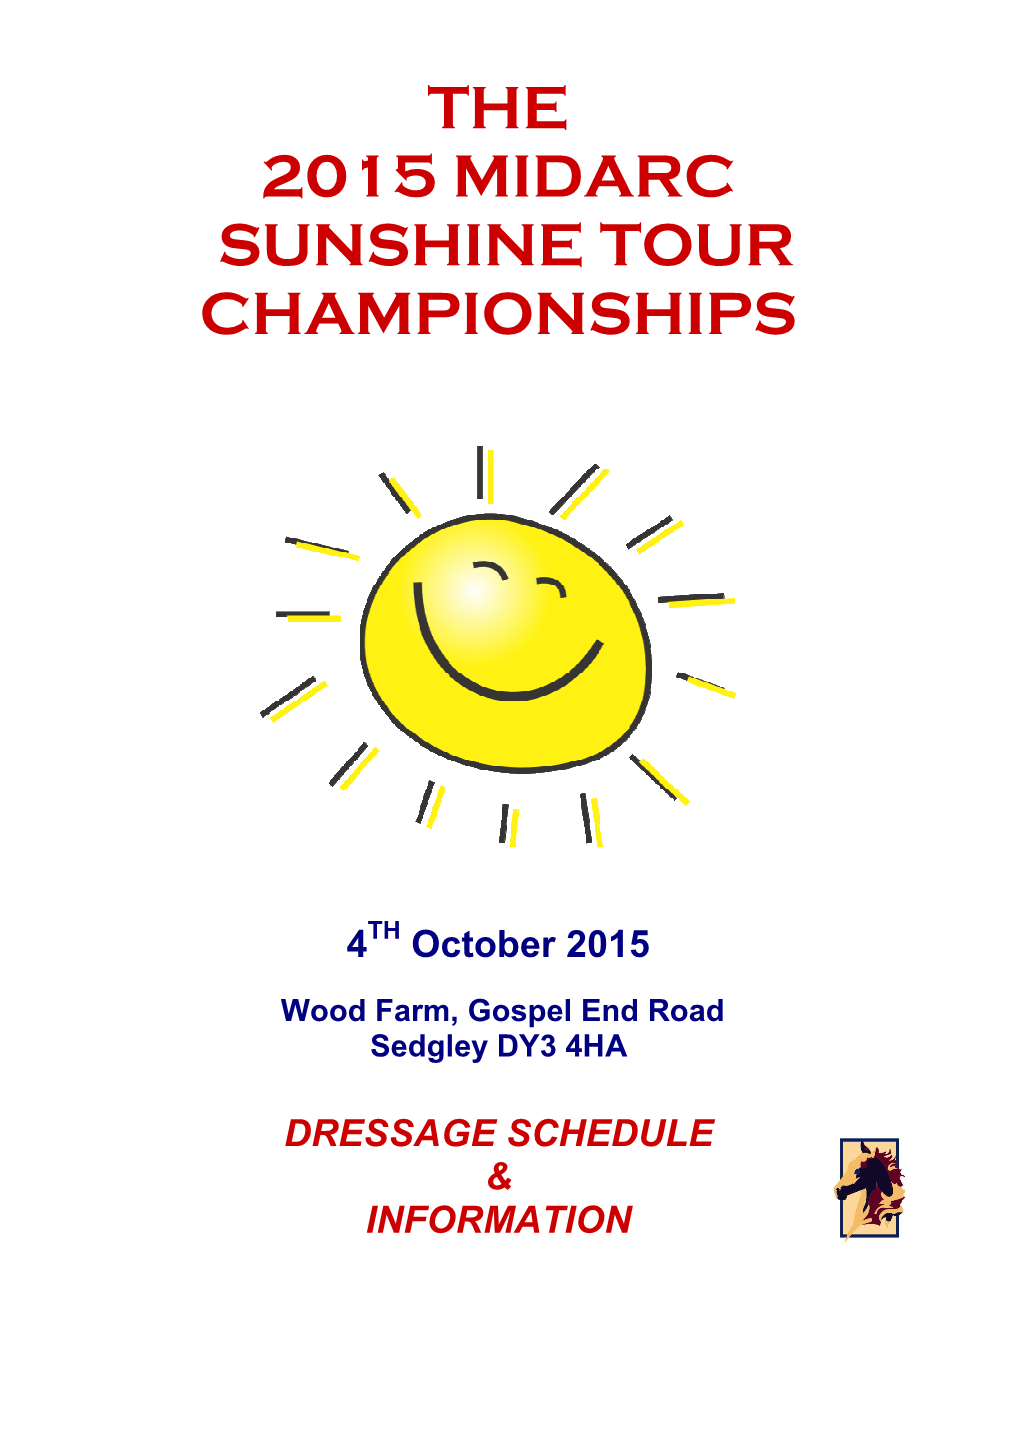 The 2015 Midarc Sunshine Tour Championships